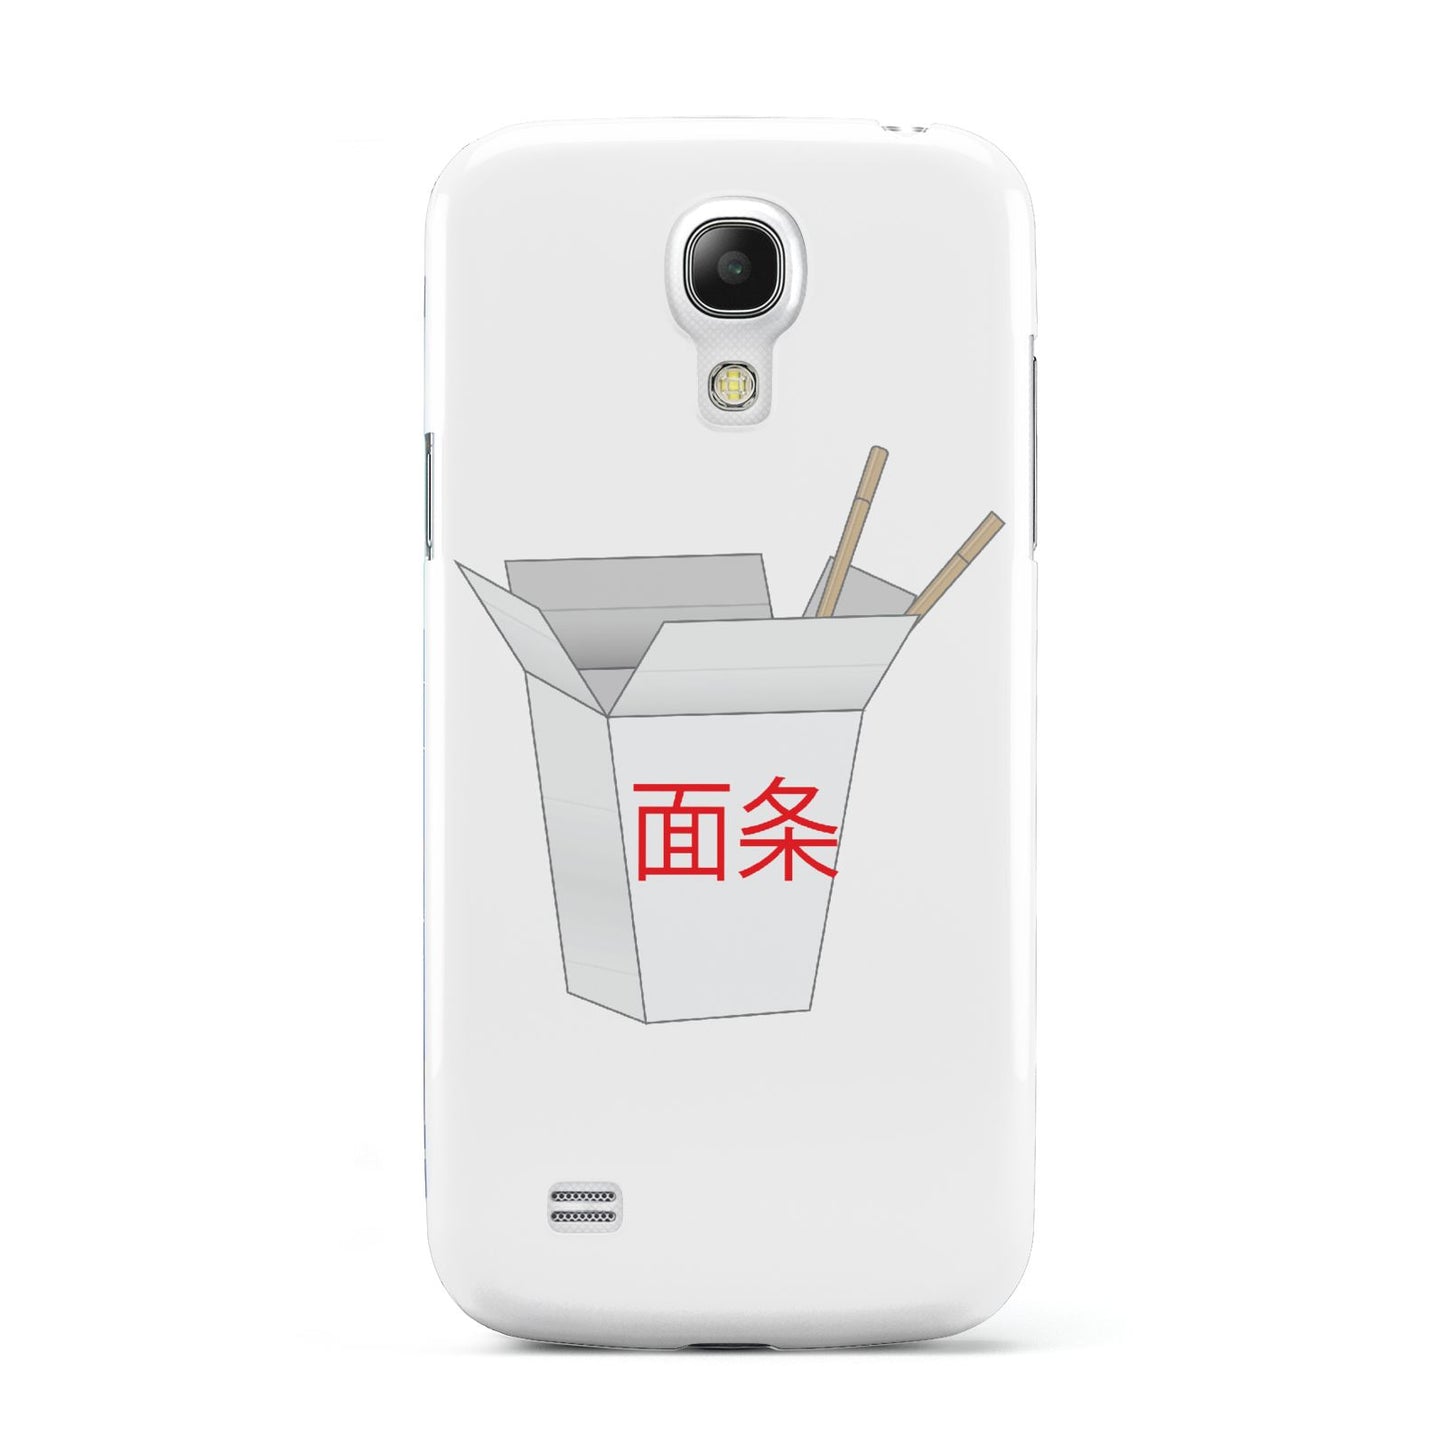 Chinese Takeaway Box Samsung Galaxy S4 Mini Case